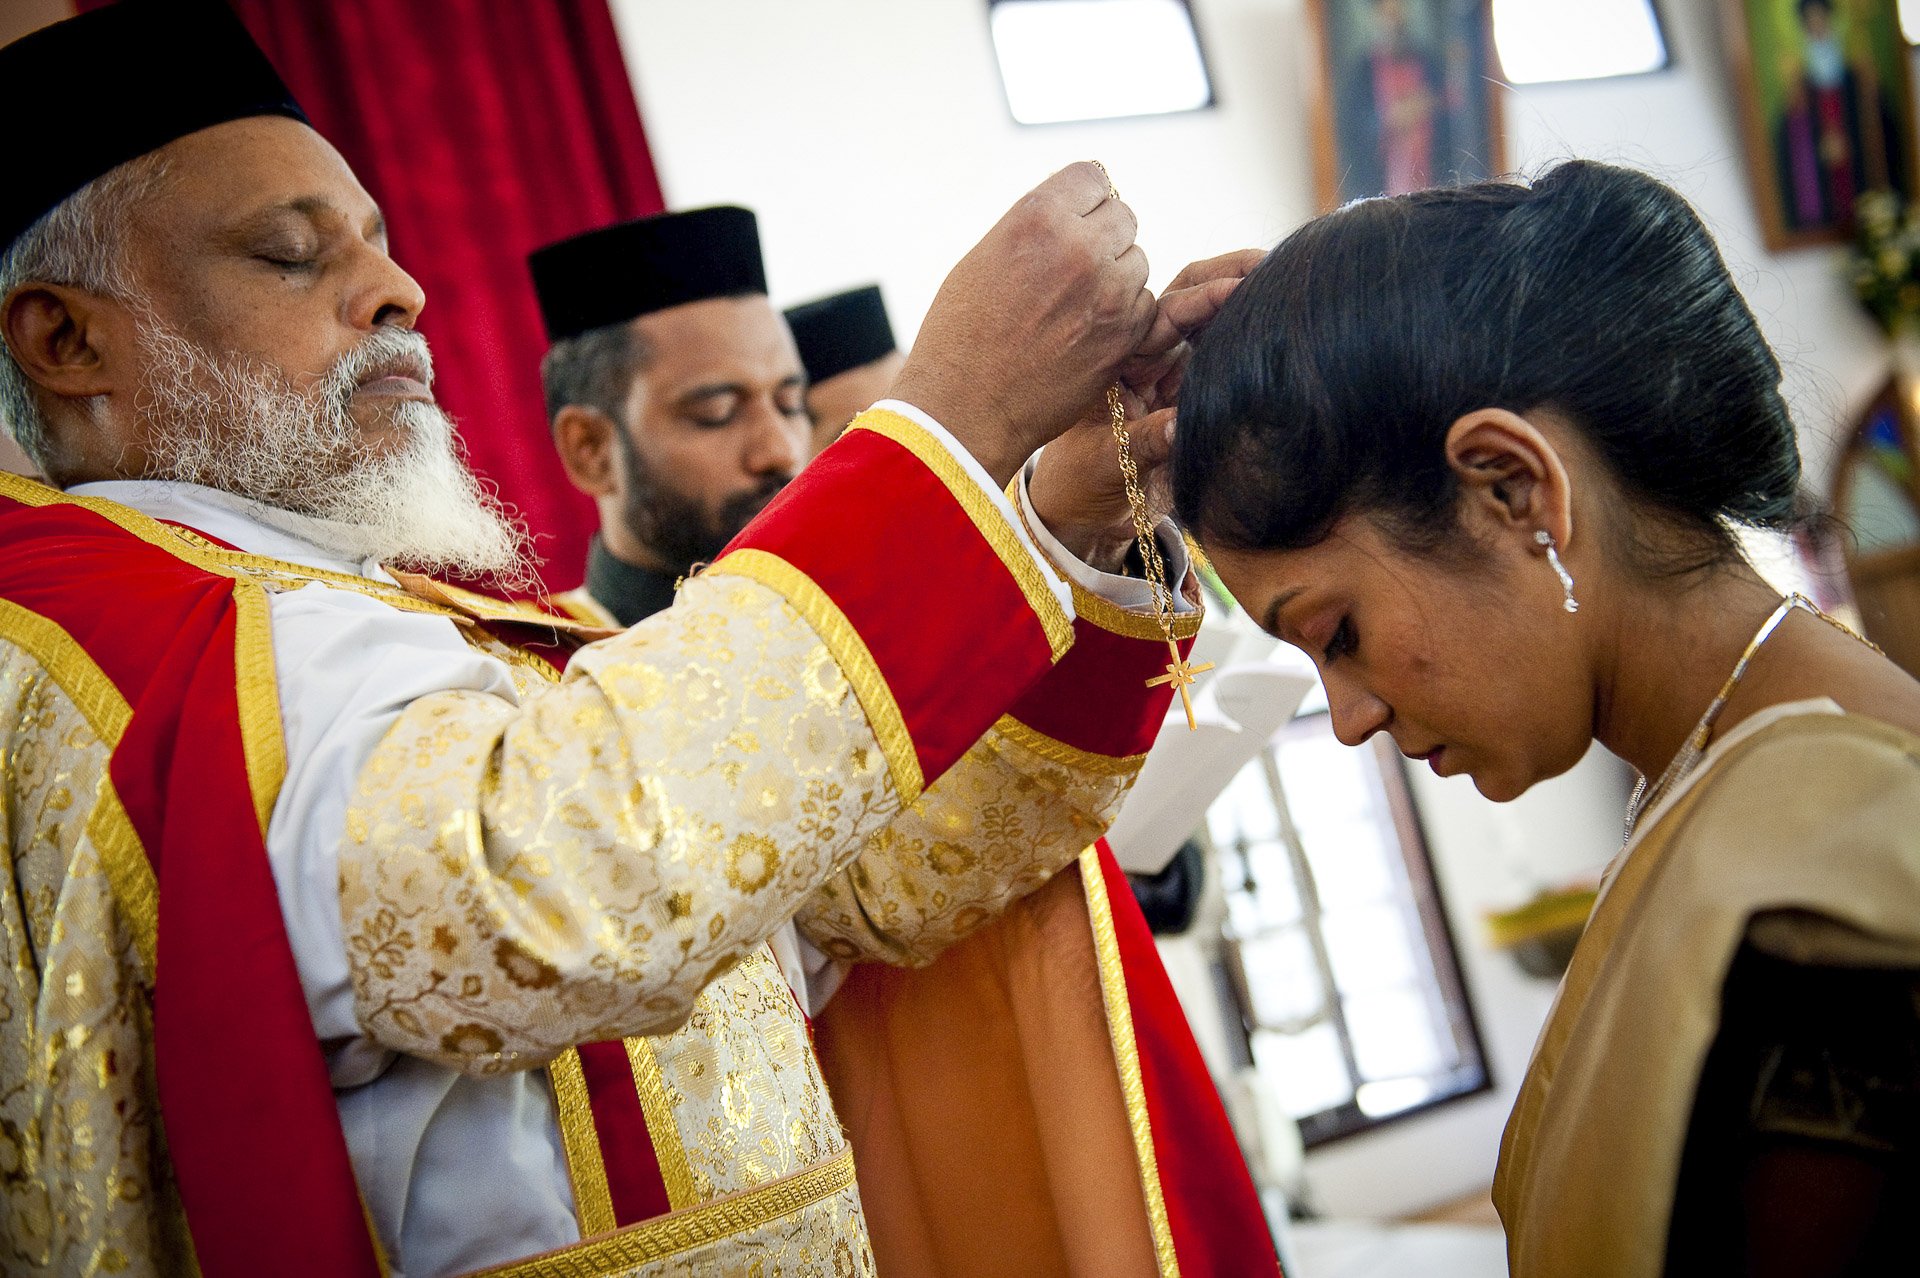 Syrian Christian wedding in Coimbatore